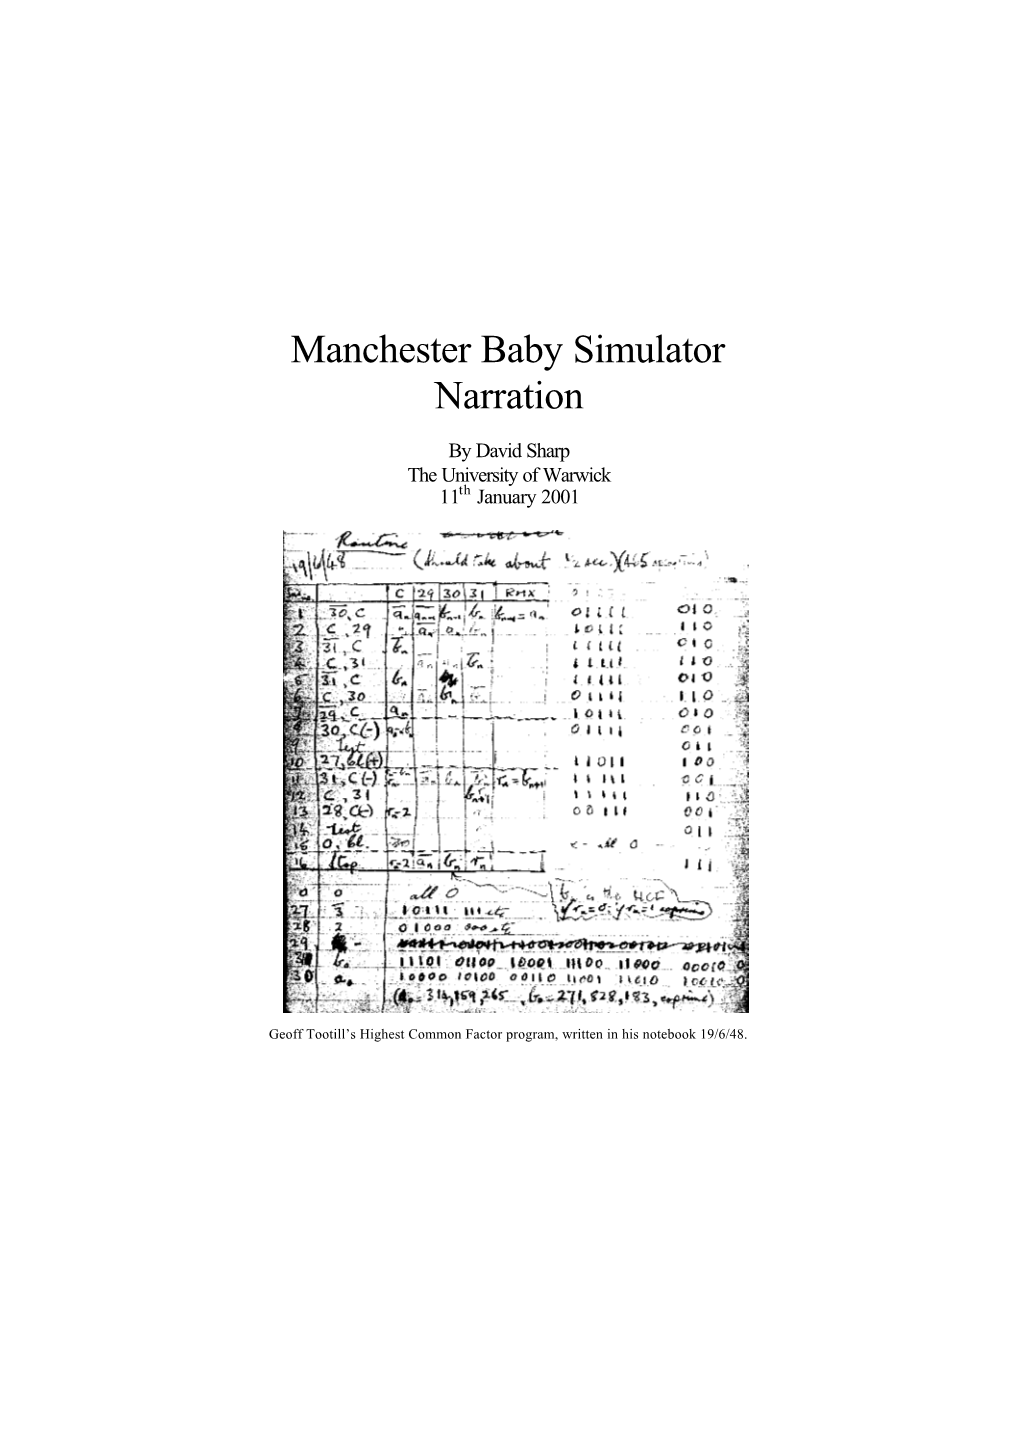 Manchester Baby Simulator Narration